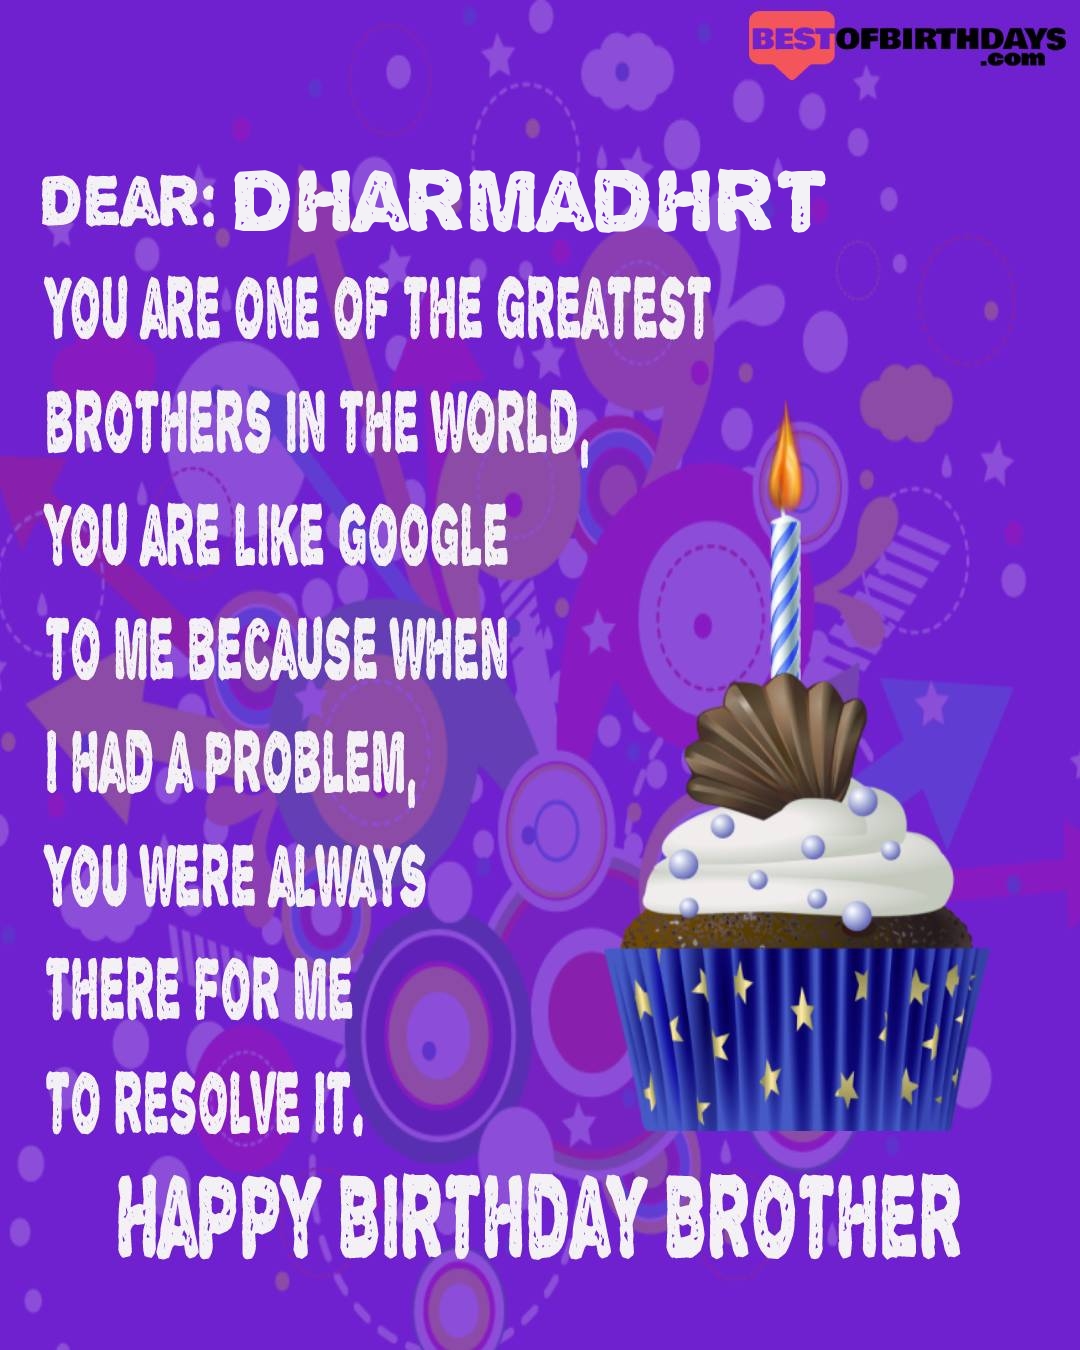 Happy birthday dharmadhrt bhai brother bro